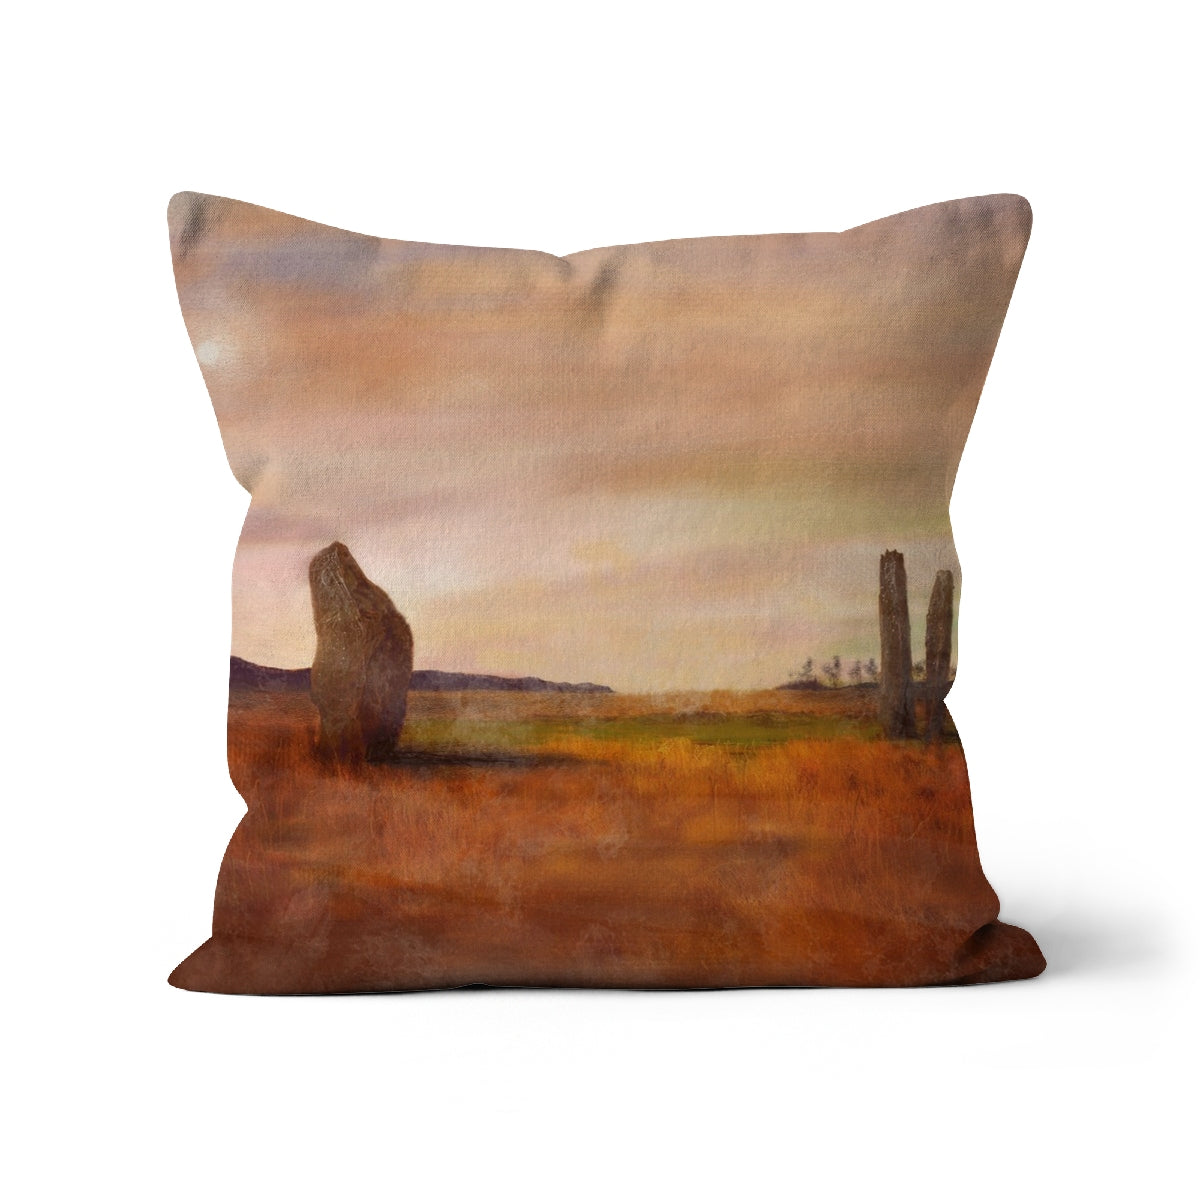 Machrie Moor Arran Art Gifts Cushion-Cushions-Arran Art Gallery-Linen-16"x16"-Paintings, Prints, Homeware, Art Gifts From Scotland By Scottish Artist Kevin Hunter